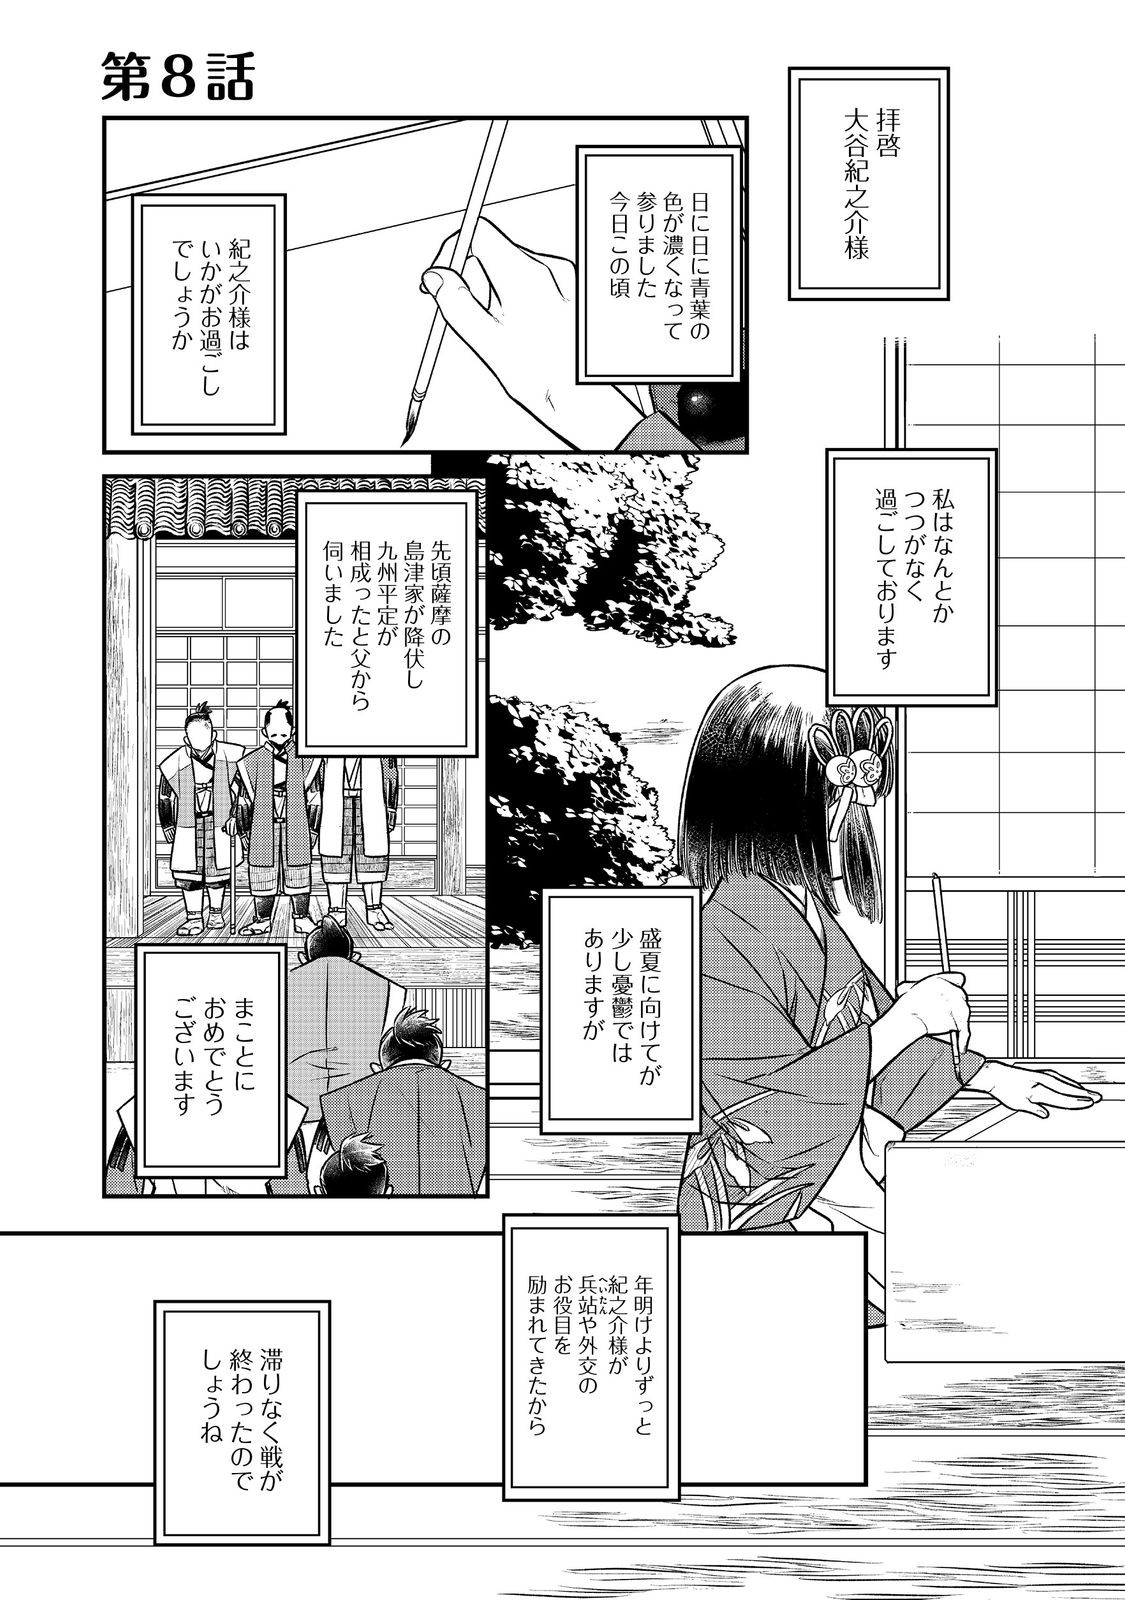 Kitanomandokoro-sama no Okeshougakari - Chapter 8.1 - Page 1